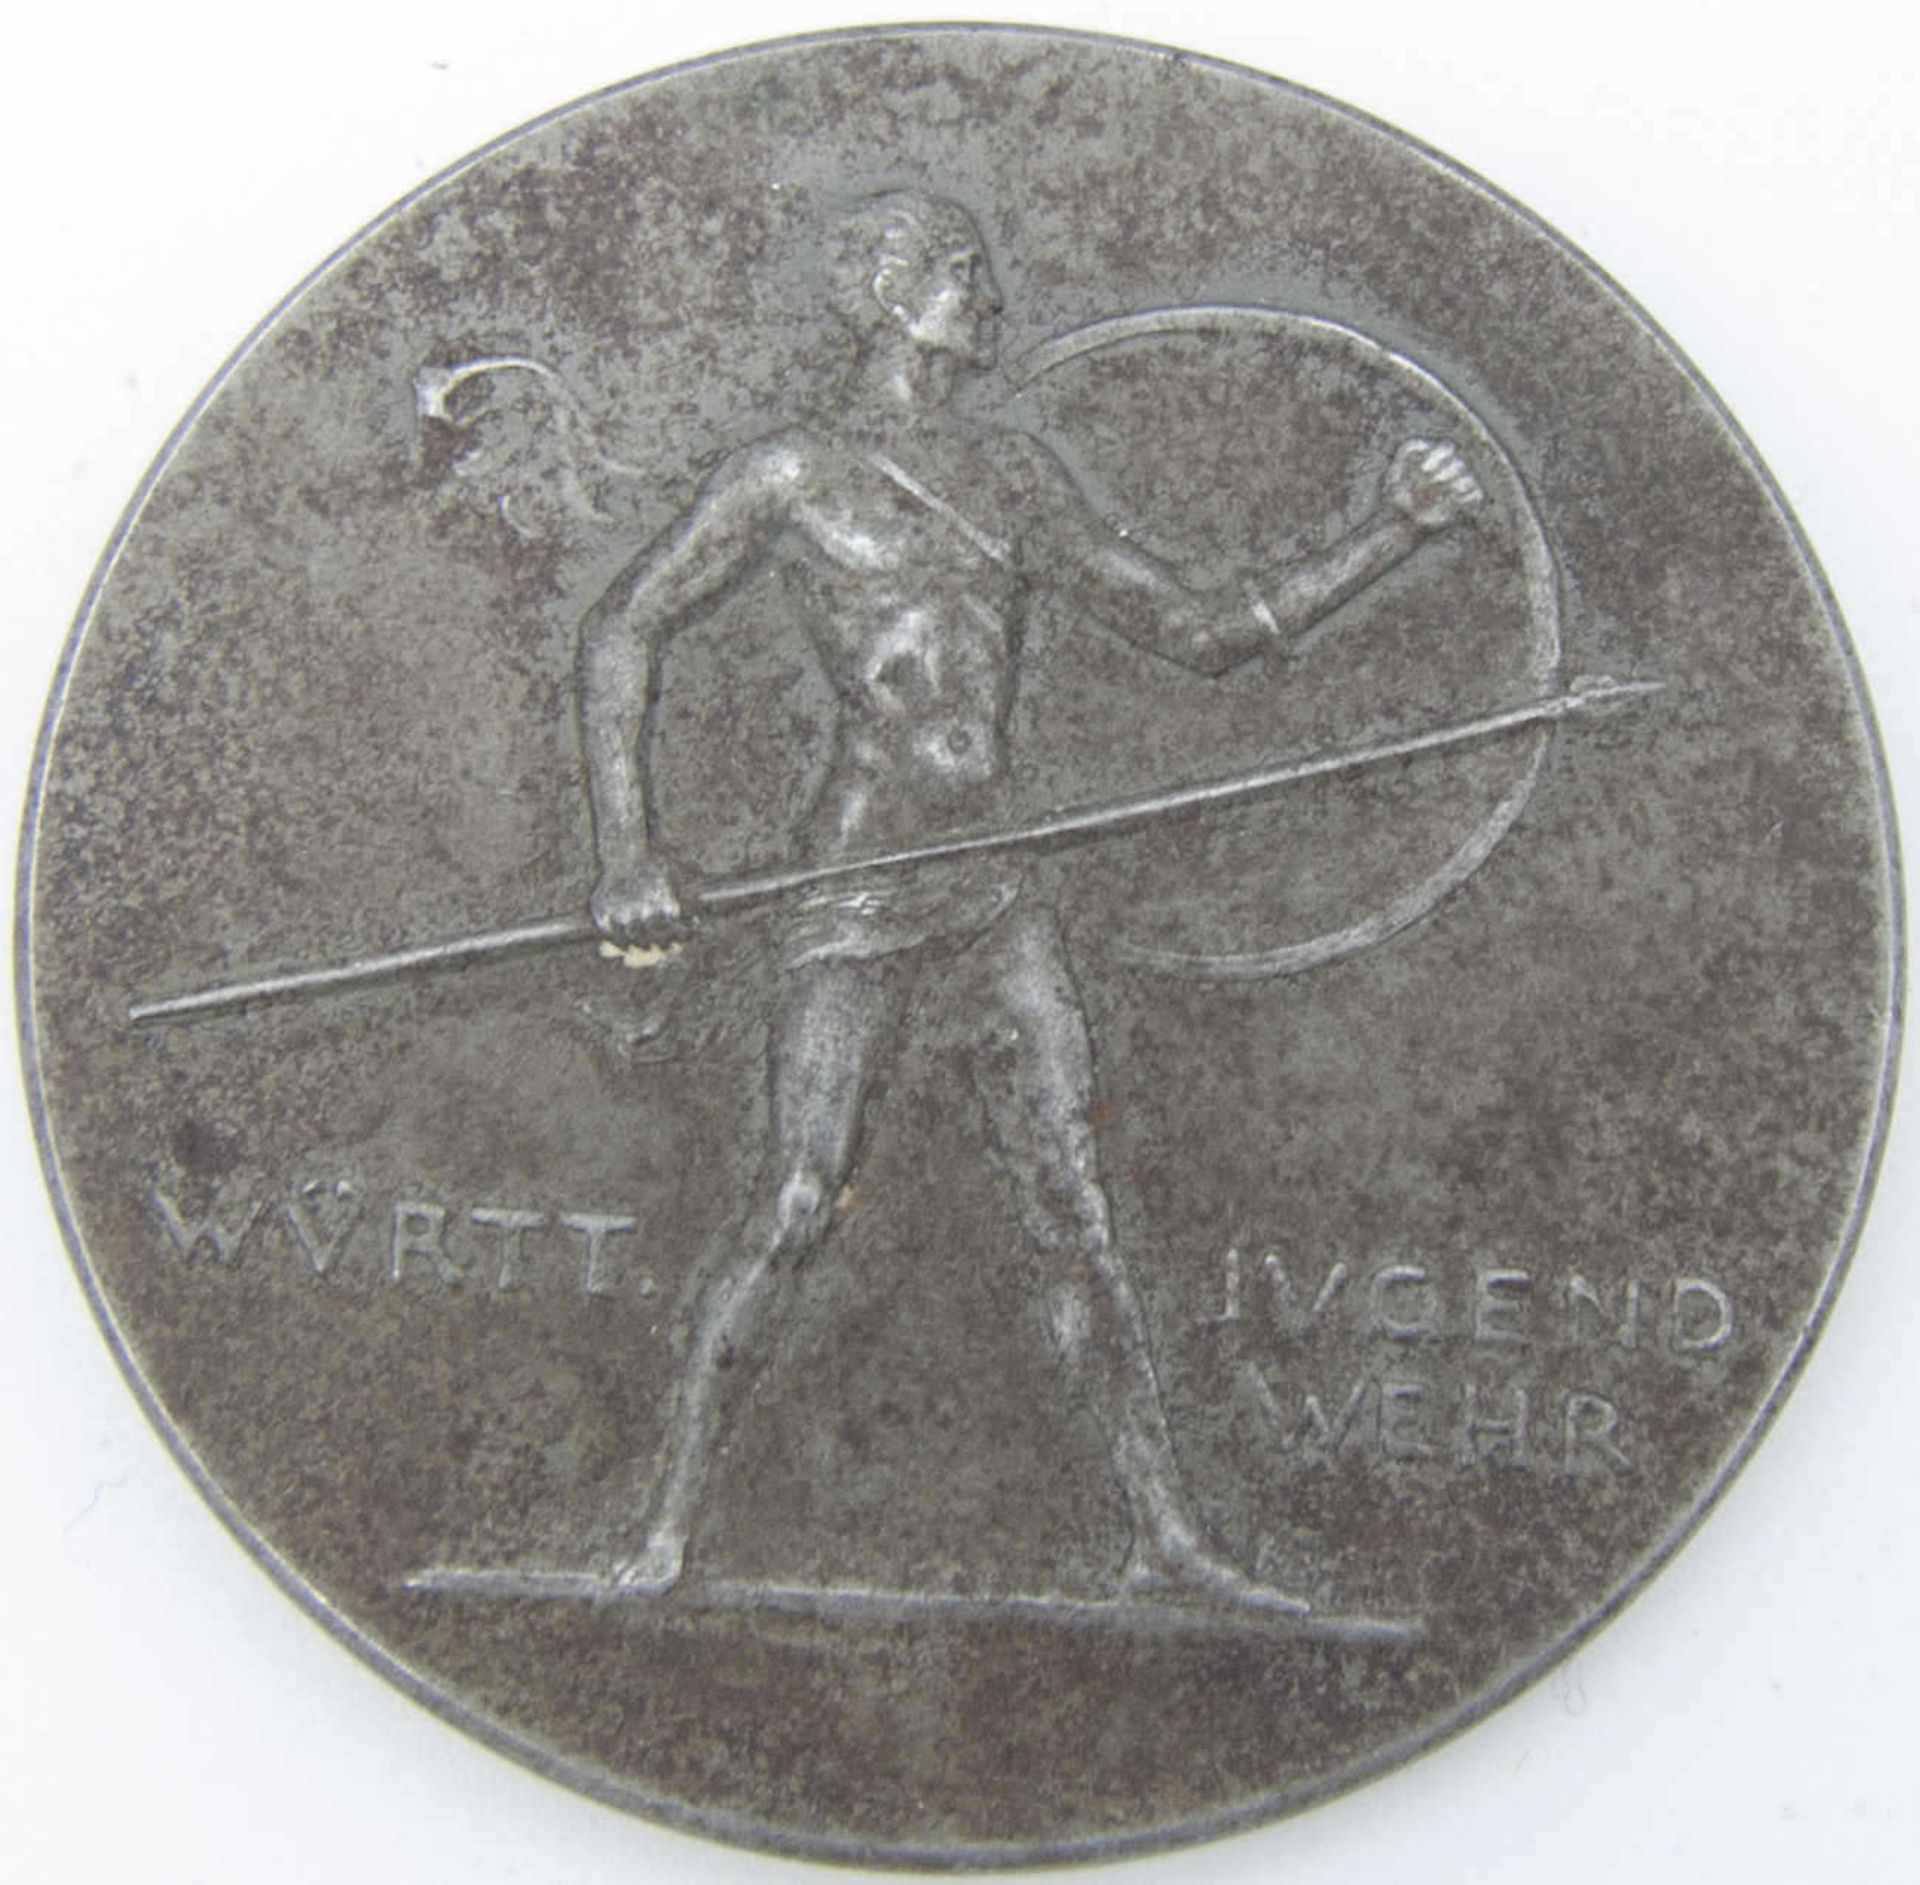 Sportmedaille, Württenbergische Jugendwehr, "Dem Sieger im Wettkampf"Sport medal, Württenberg